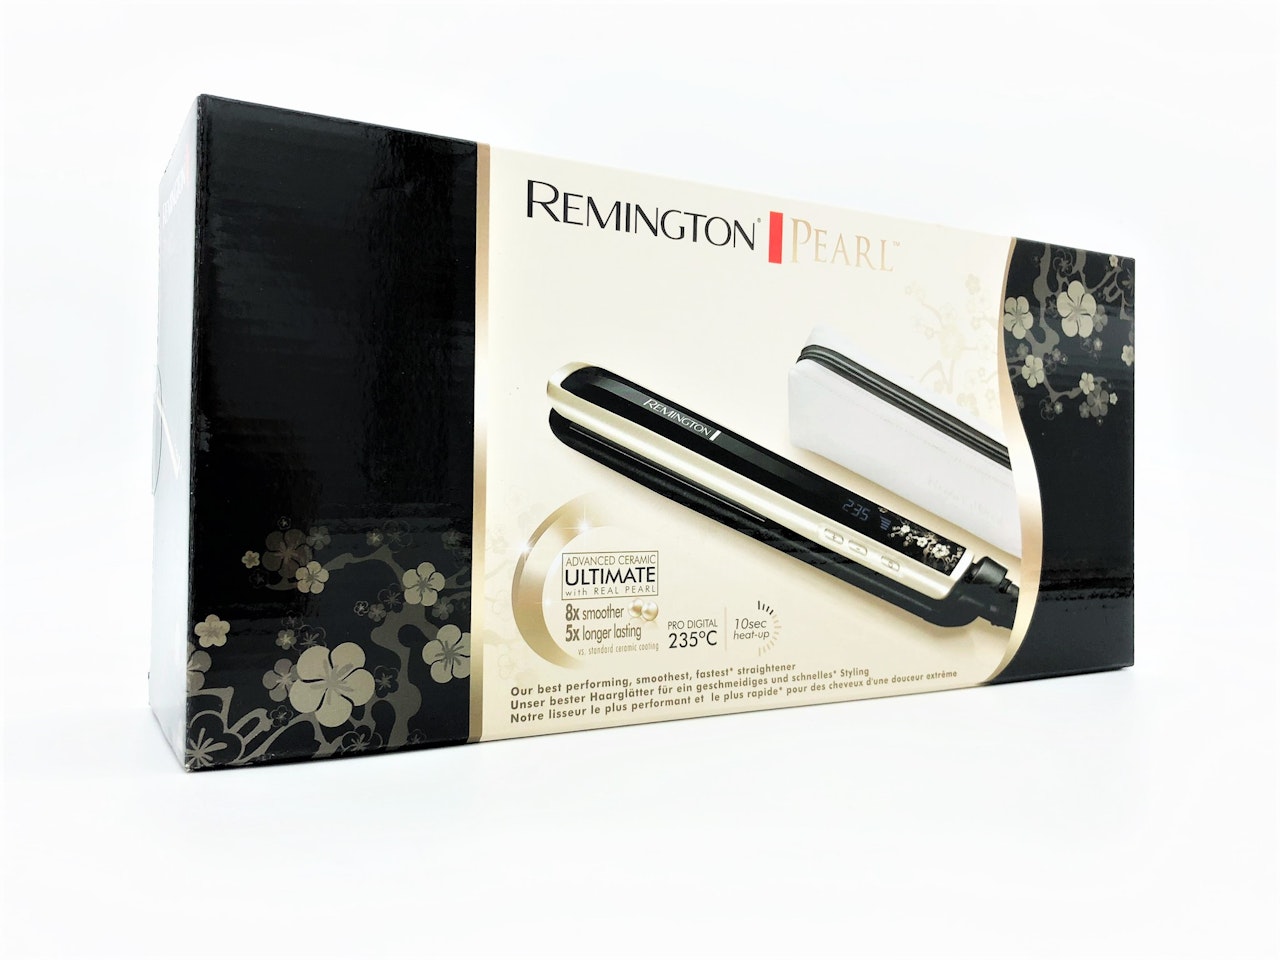 Remington Plattång Pearl straightener S9500